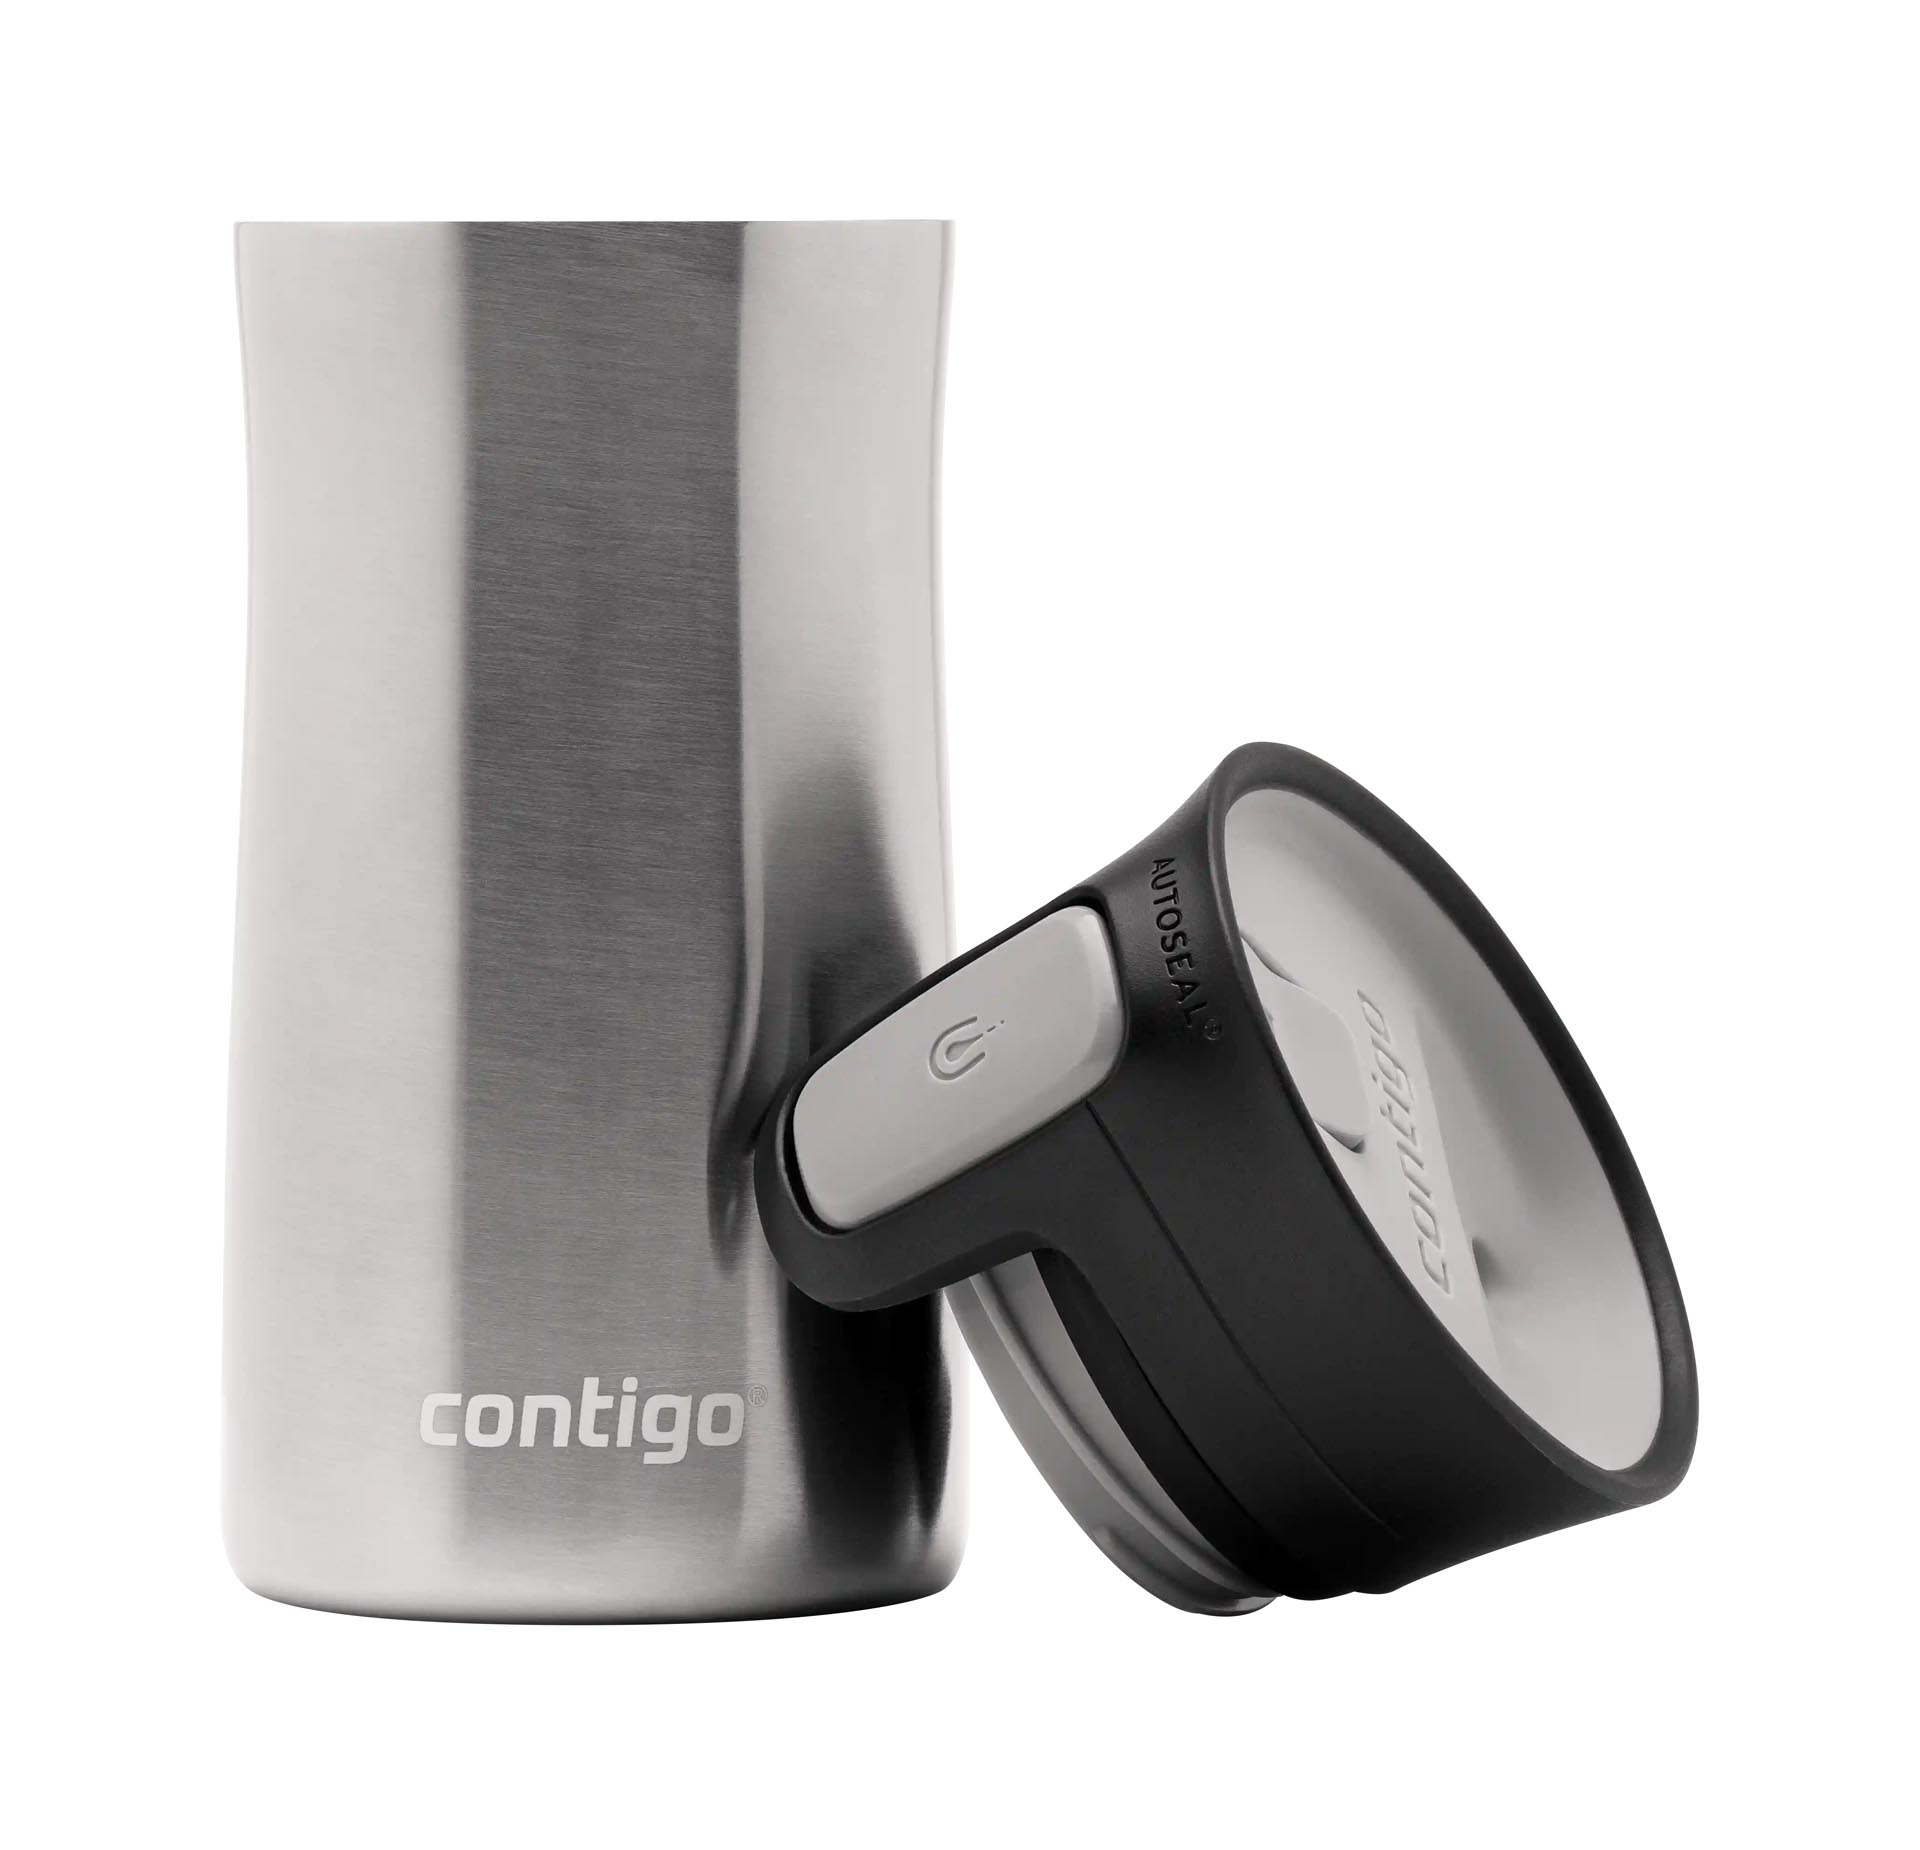 Contigo | Thermobecher Autoseal Pinnacle | 300ml | Stainless Steel